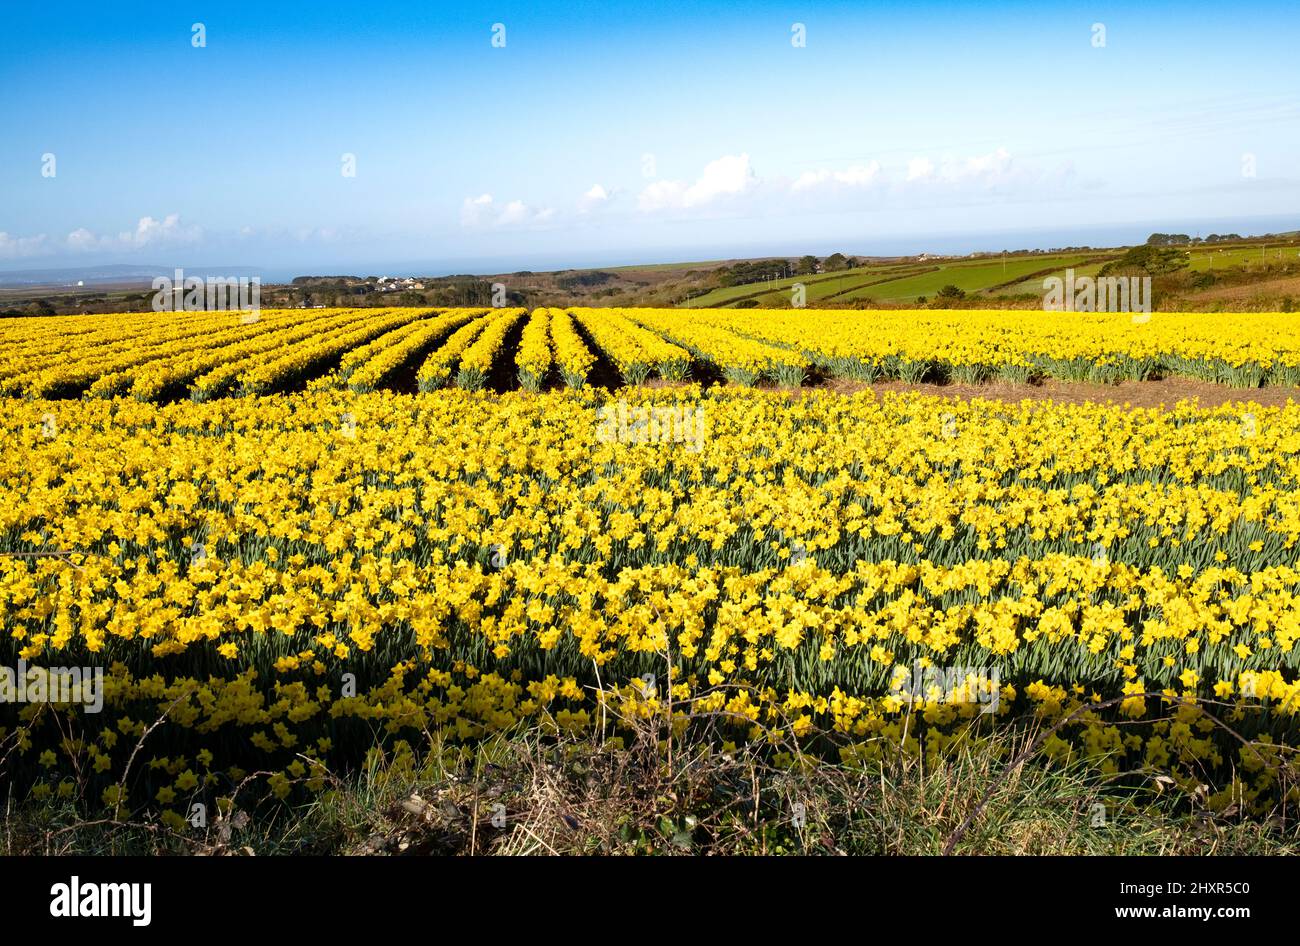 Daffodil Fields in der Nähe von St. agnes in cornwall, england Stockfoto